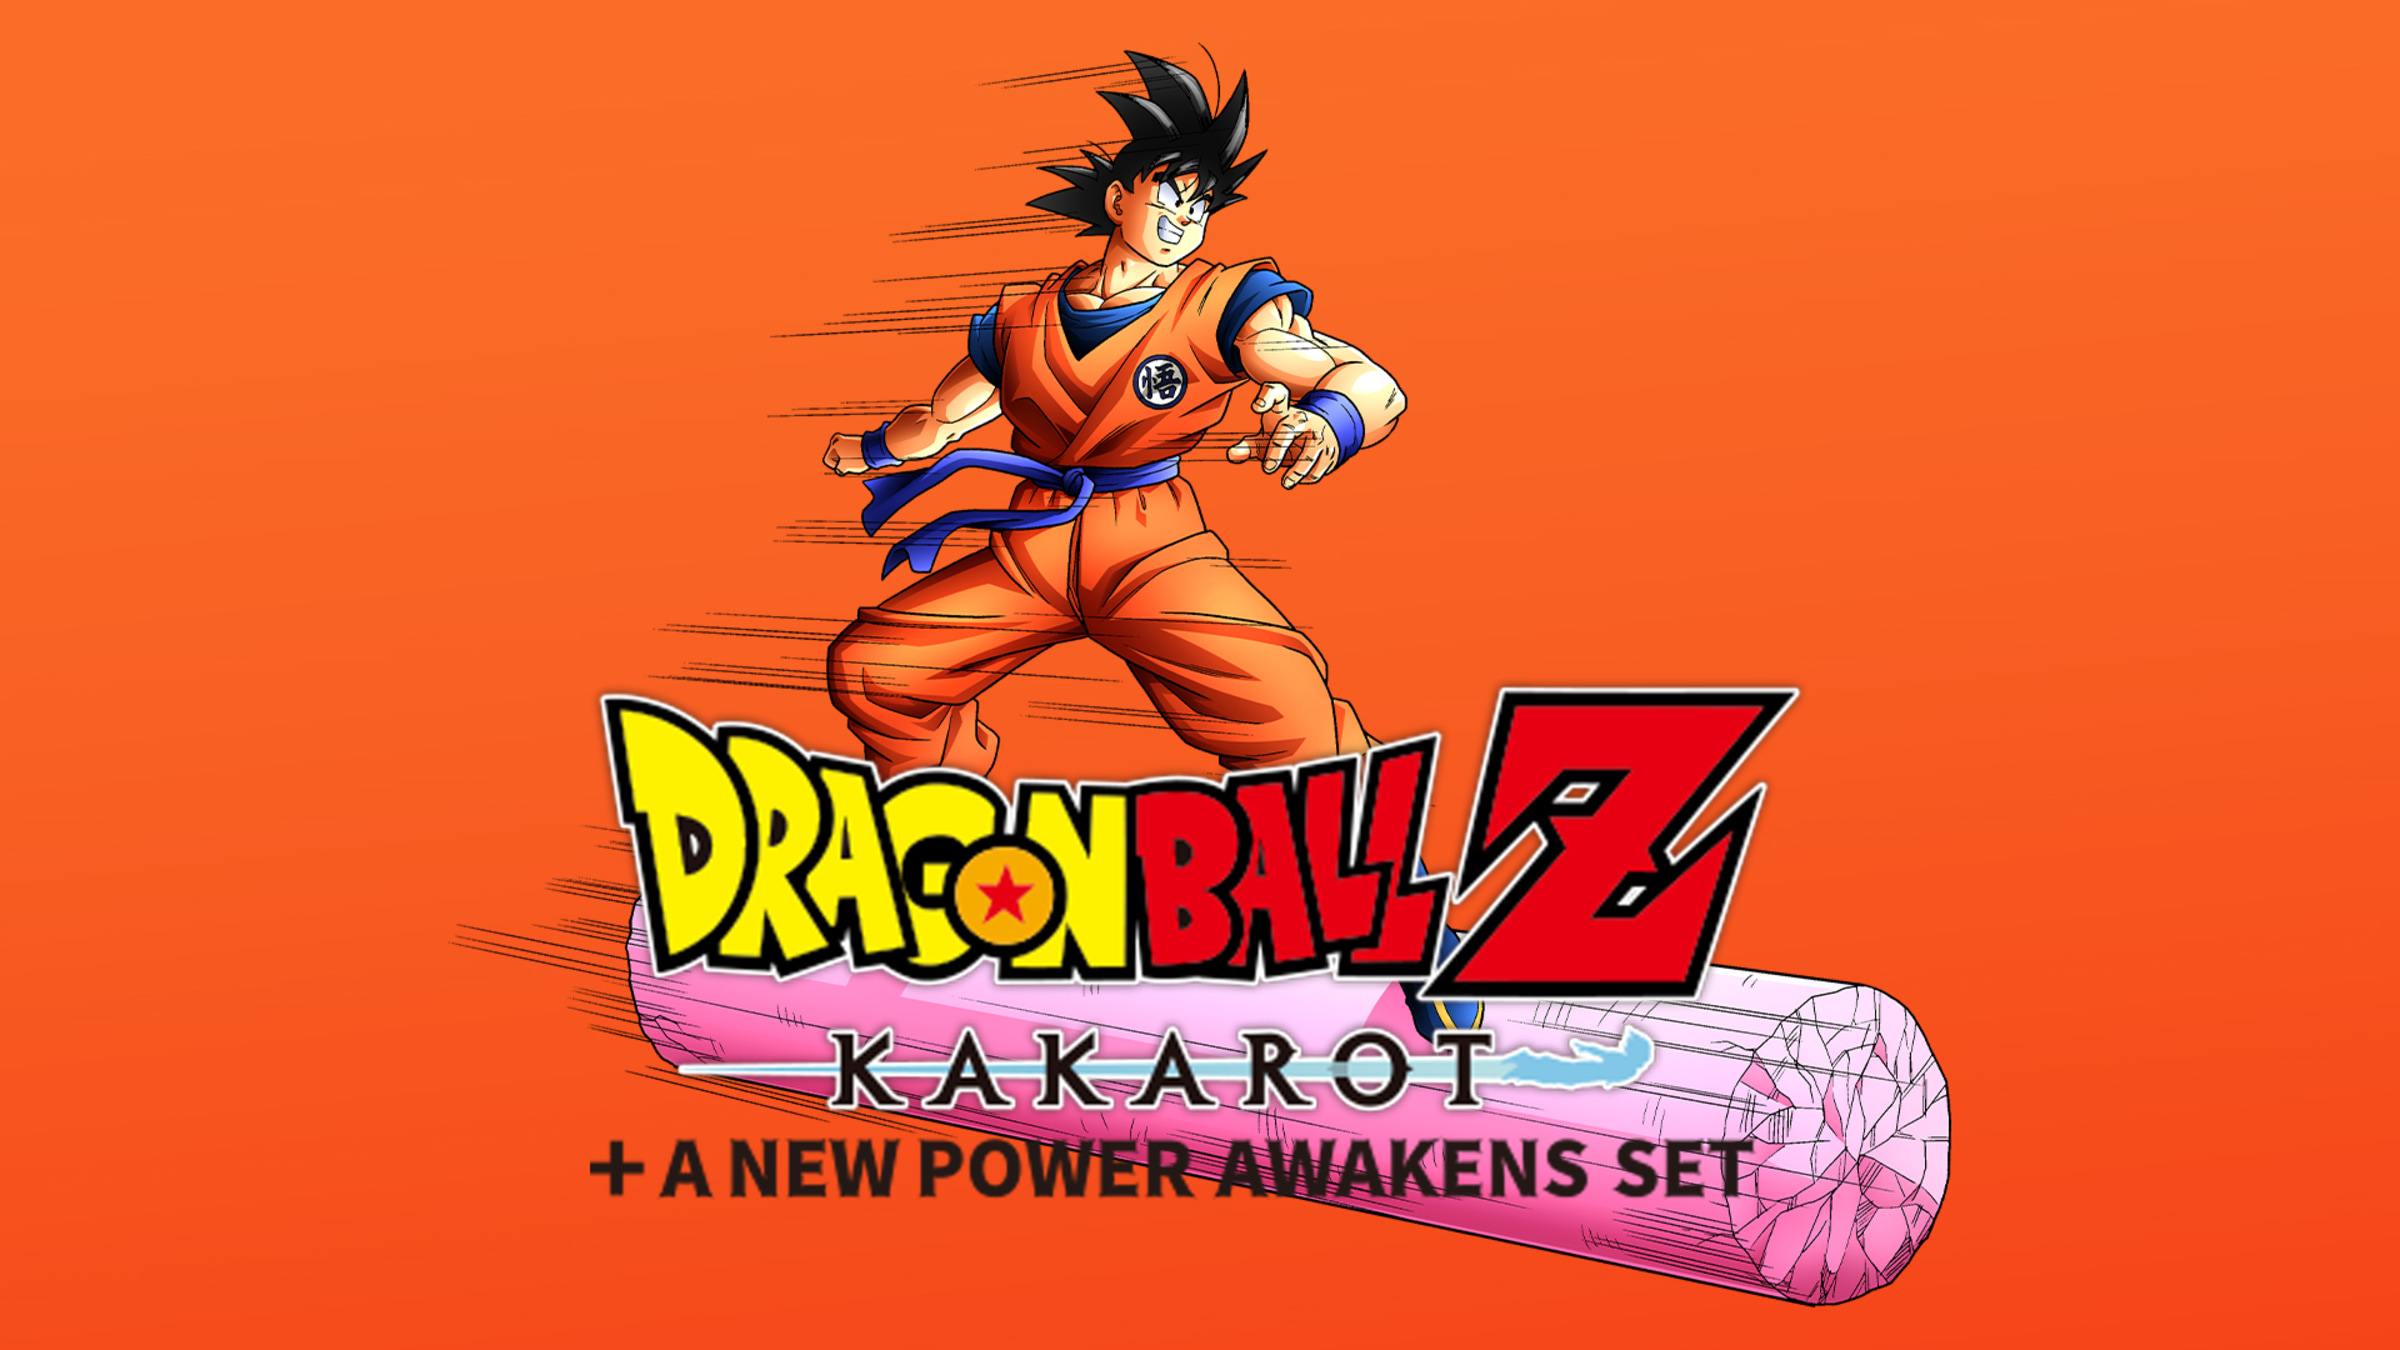 DRAGON BALL Z: KAKAROT + A NEW POWER AWAKENS SET